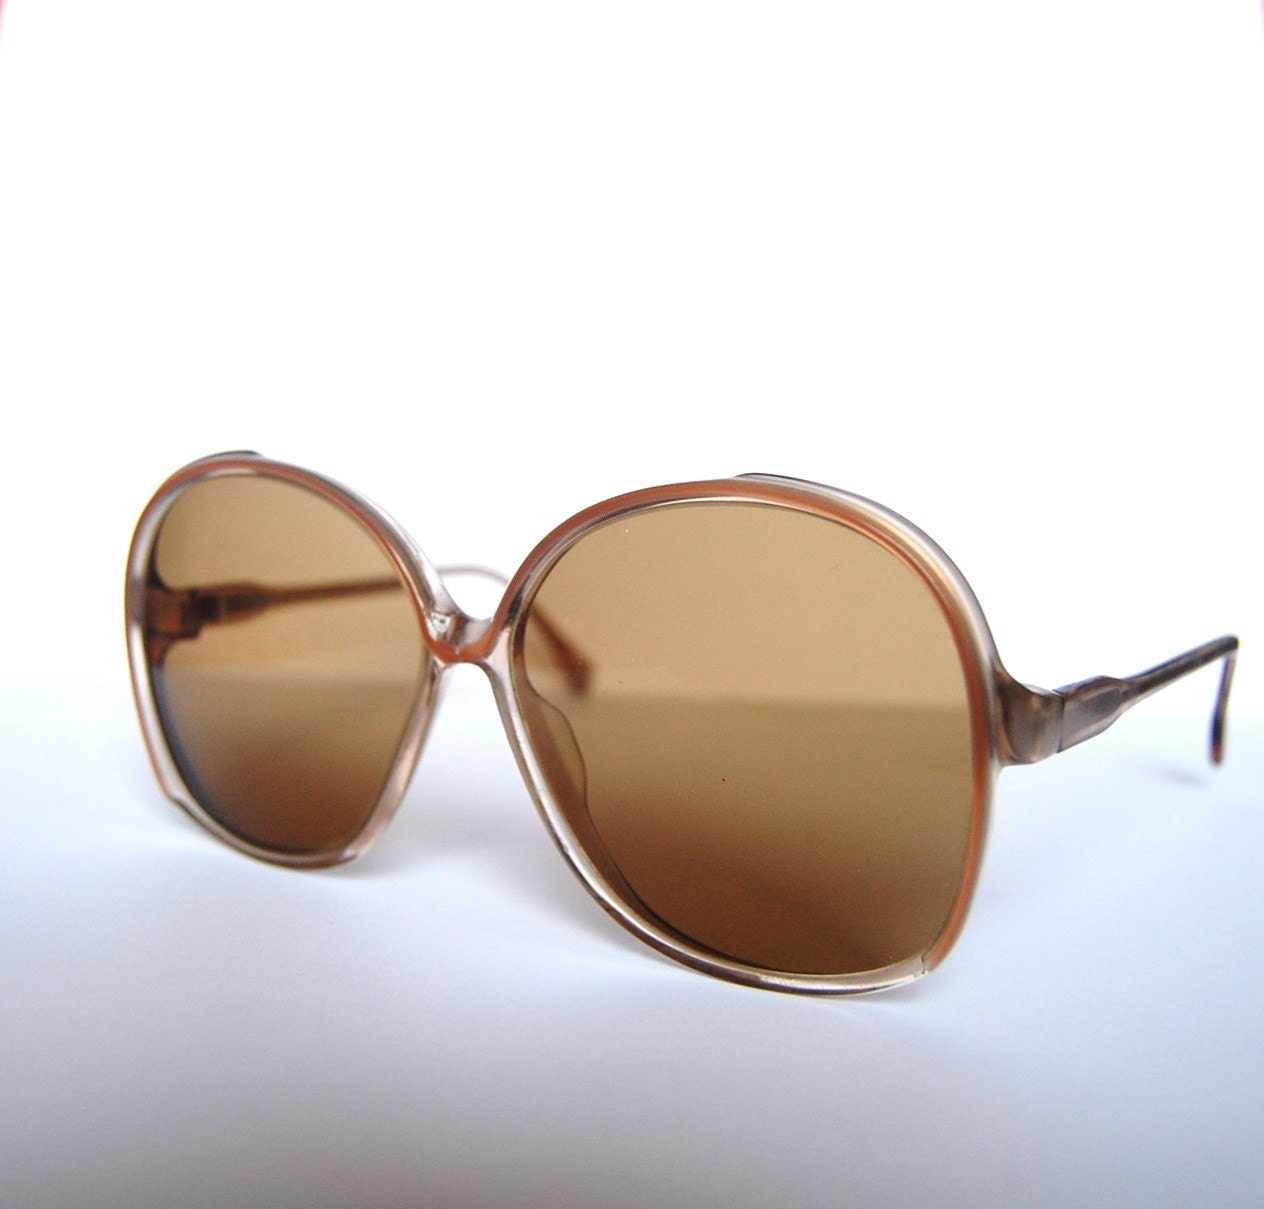 Vintage retro shades sunglasses Germany - RetroEyewear